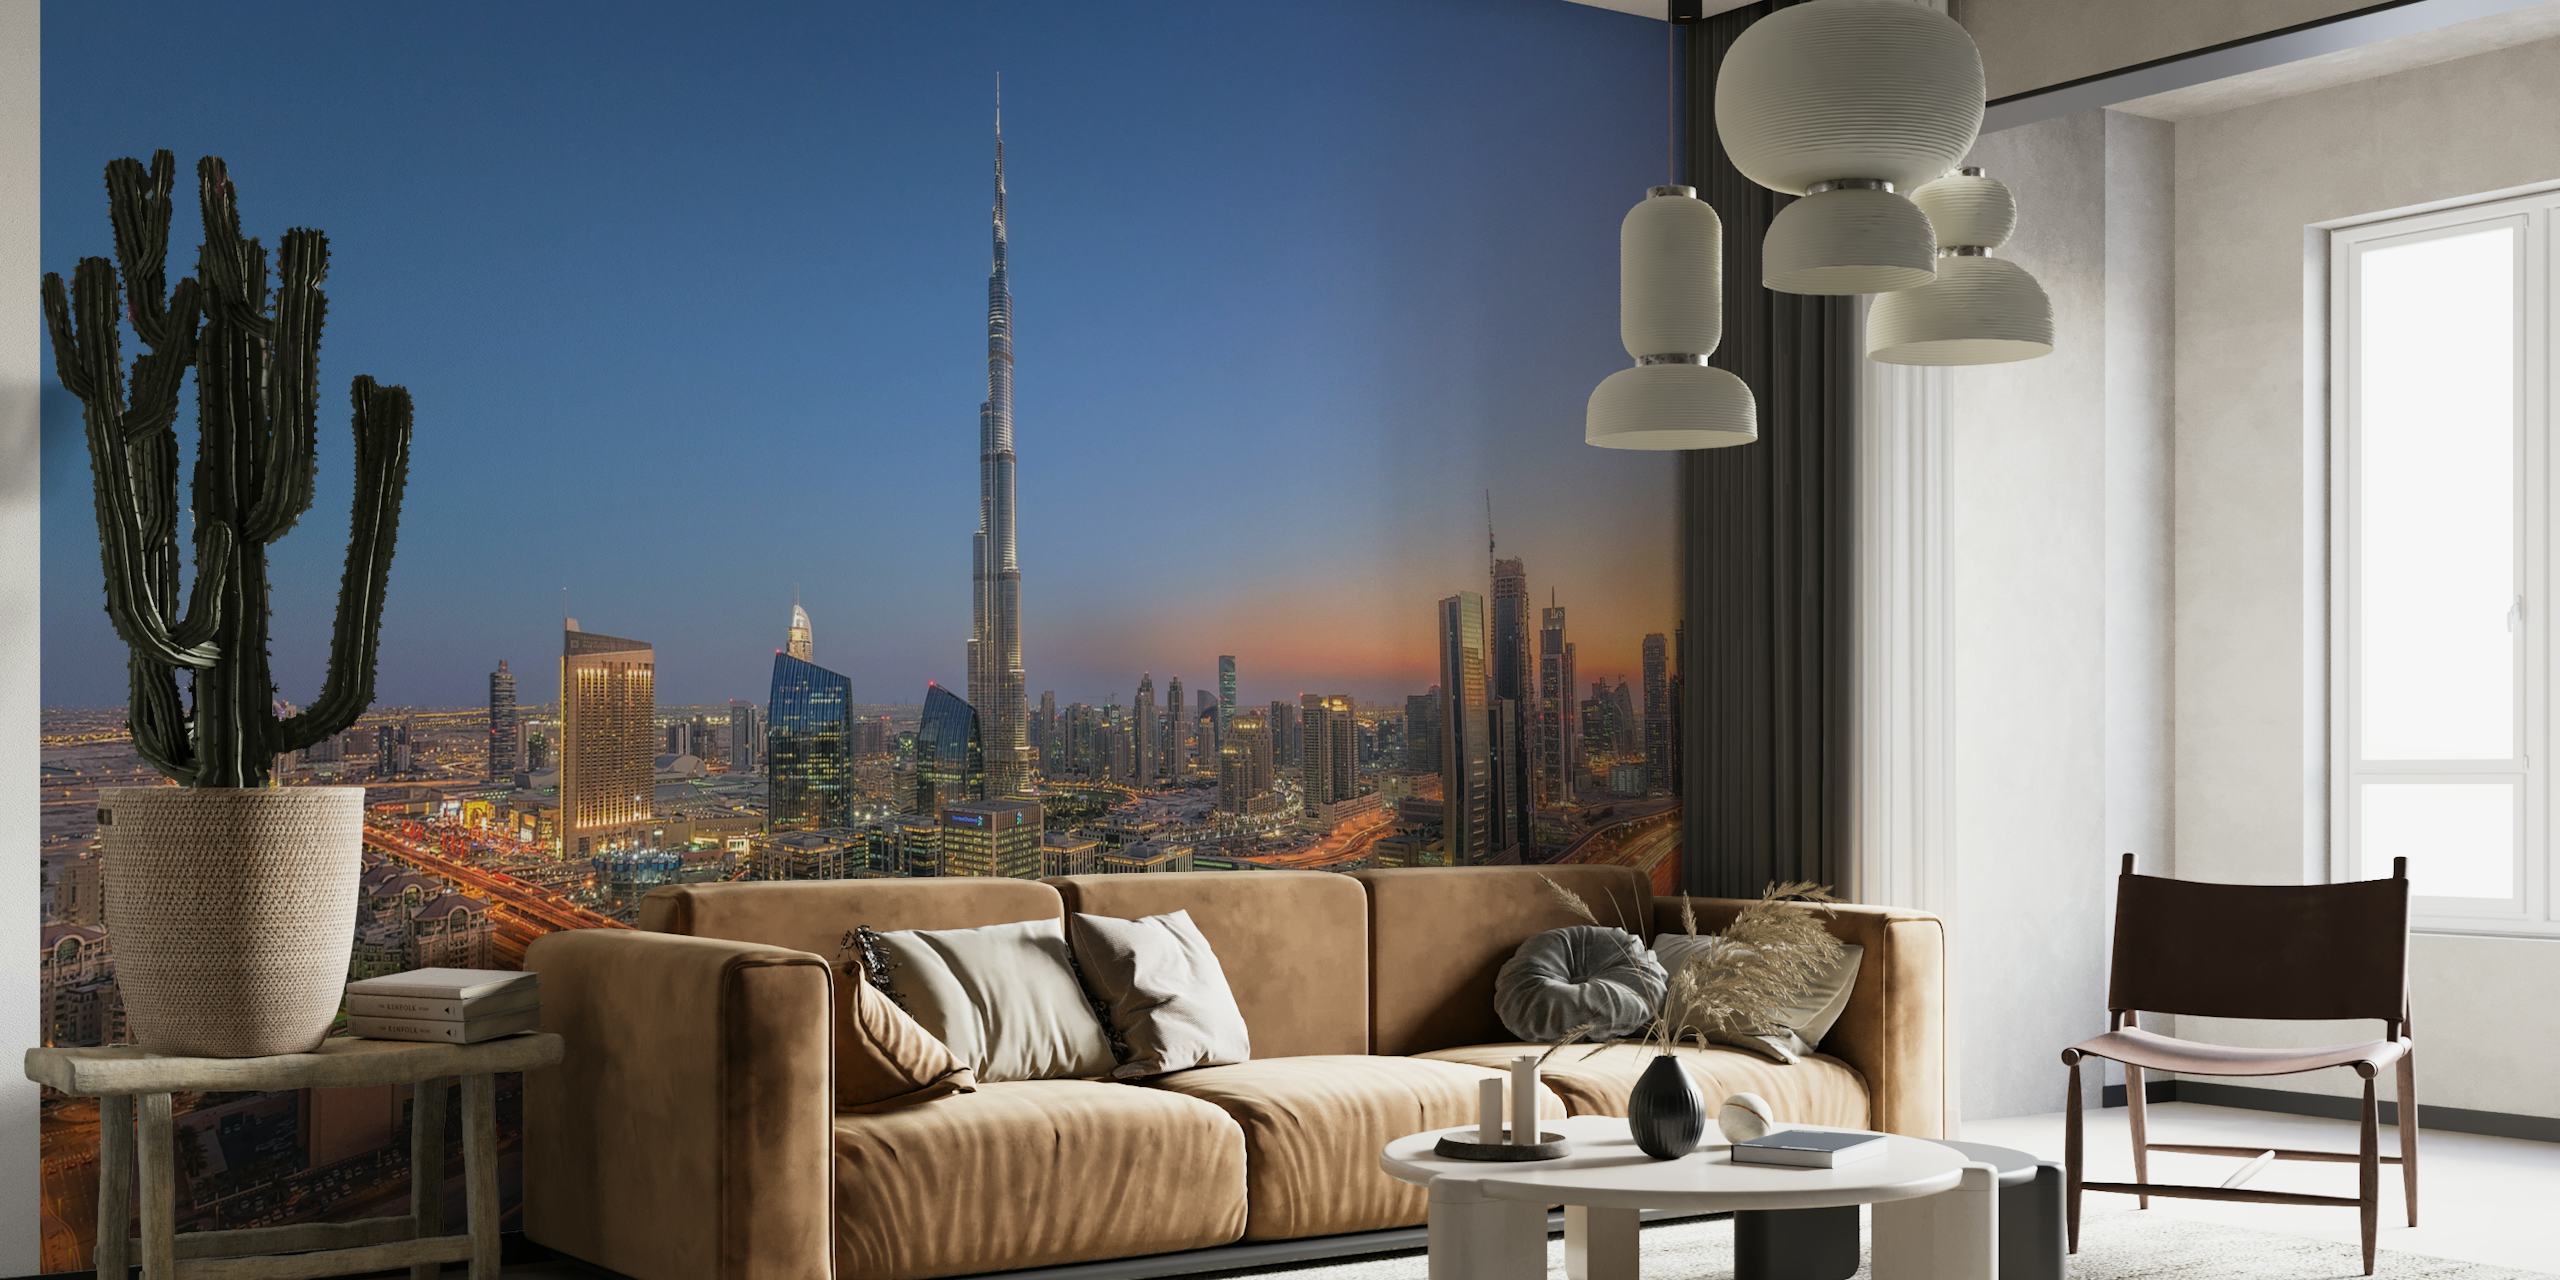 The Amazing Burj Khalifah papel pintado